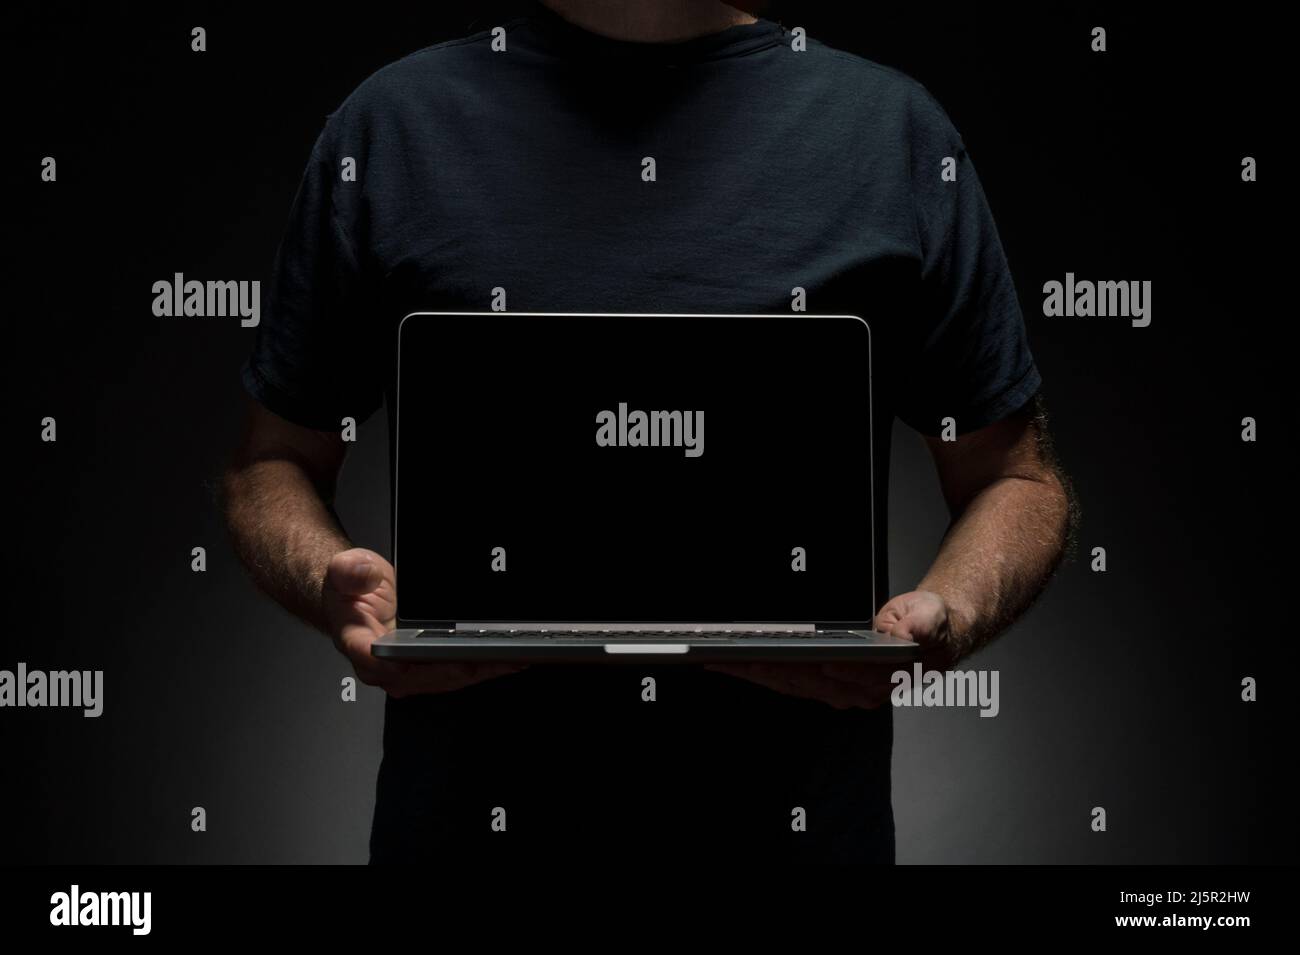 Man holding laptop Stock Photo